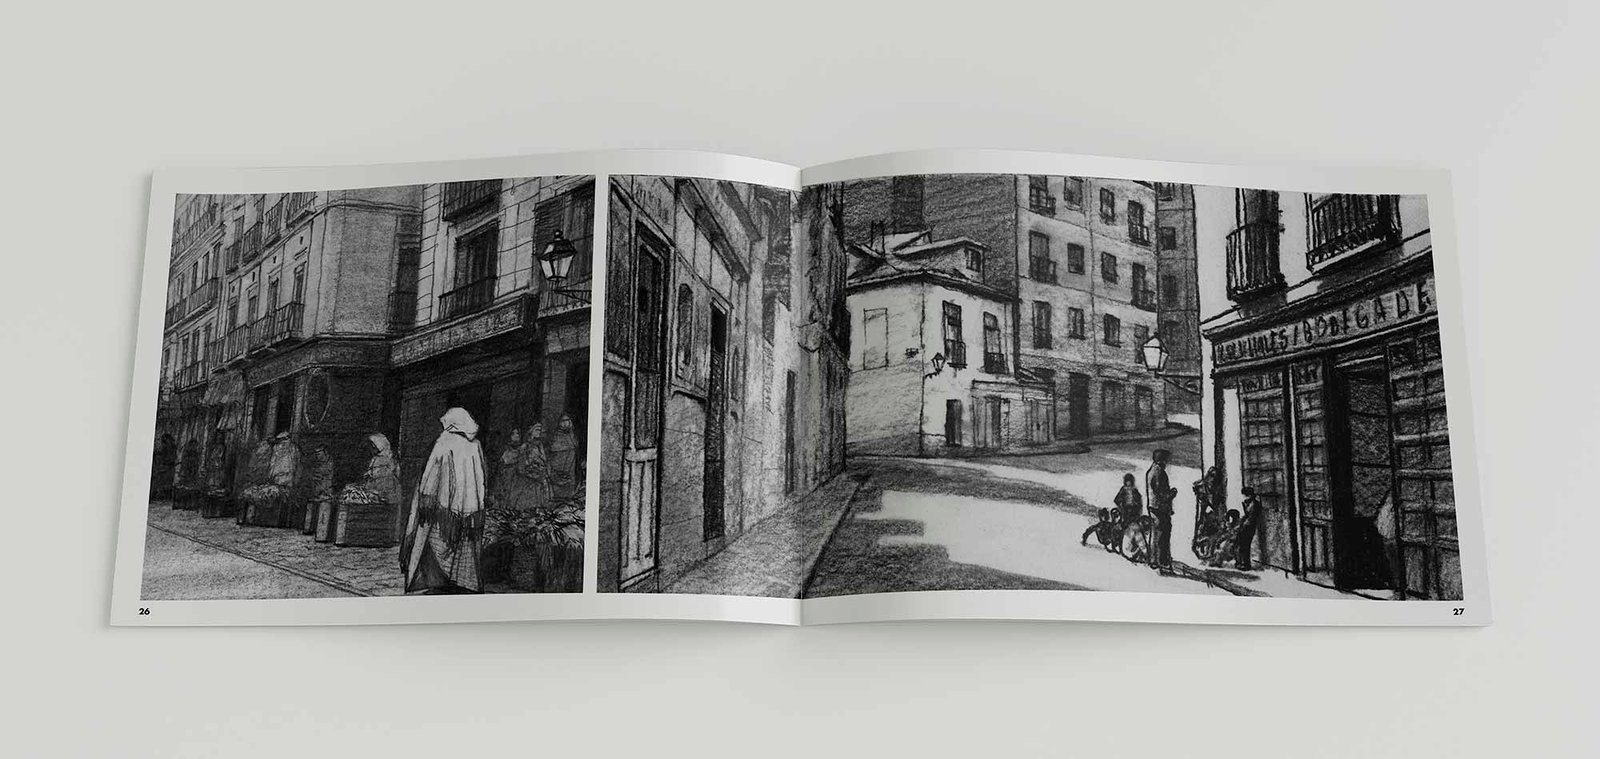 Mario Jodra Artist's Book "Viejo Madrid". Interior. Pages 26-27